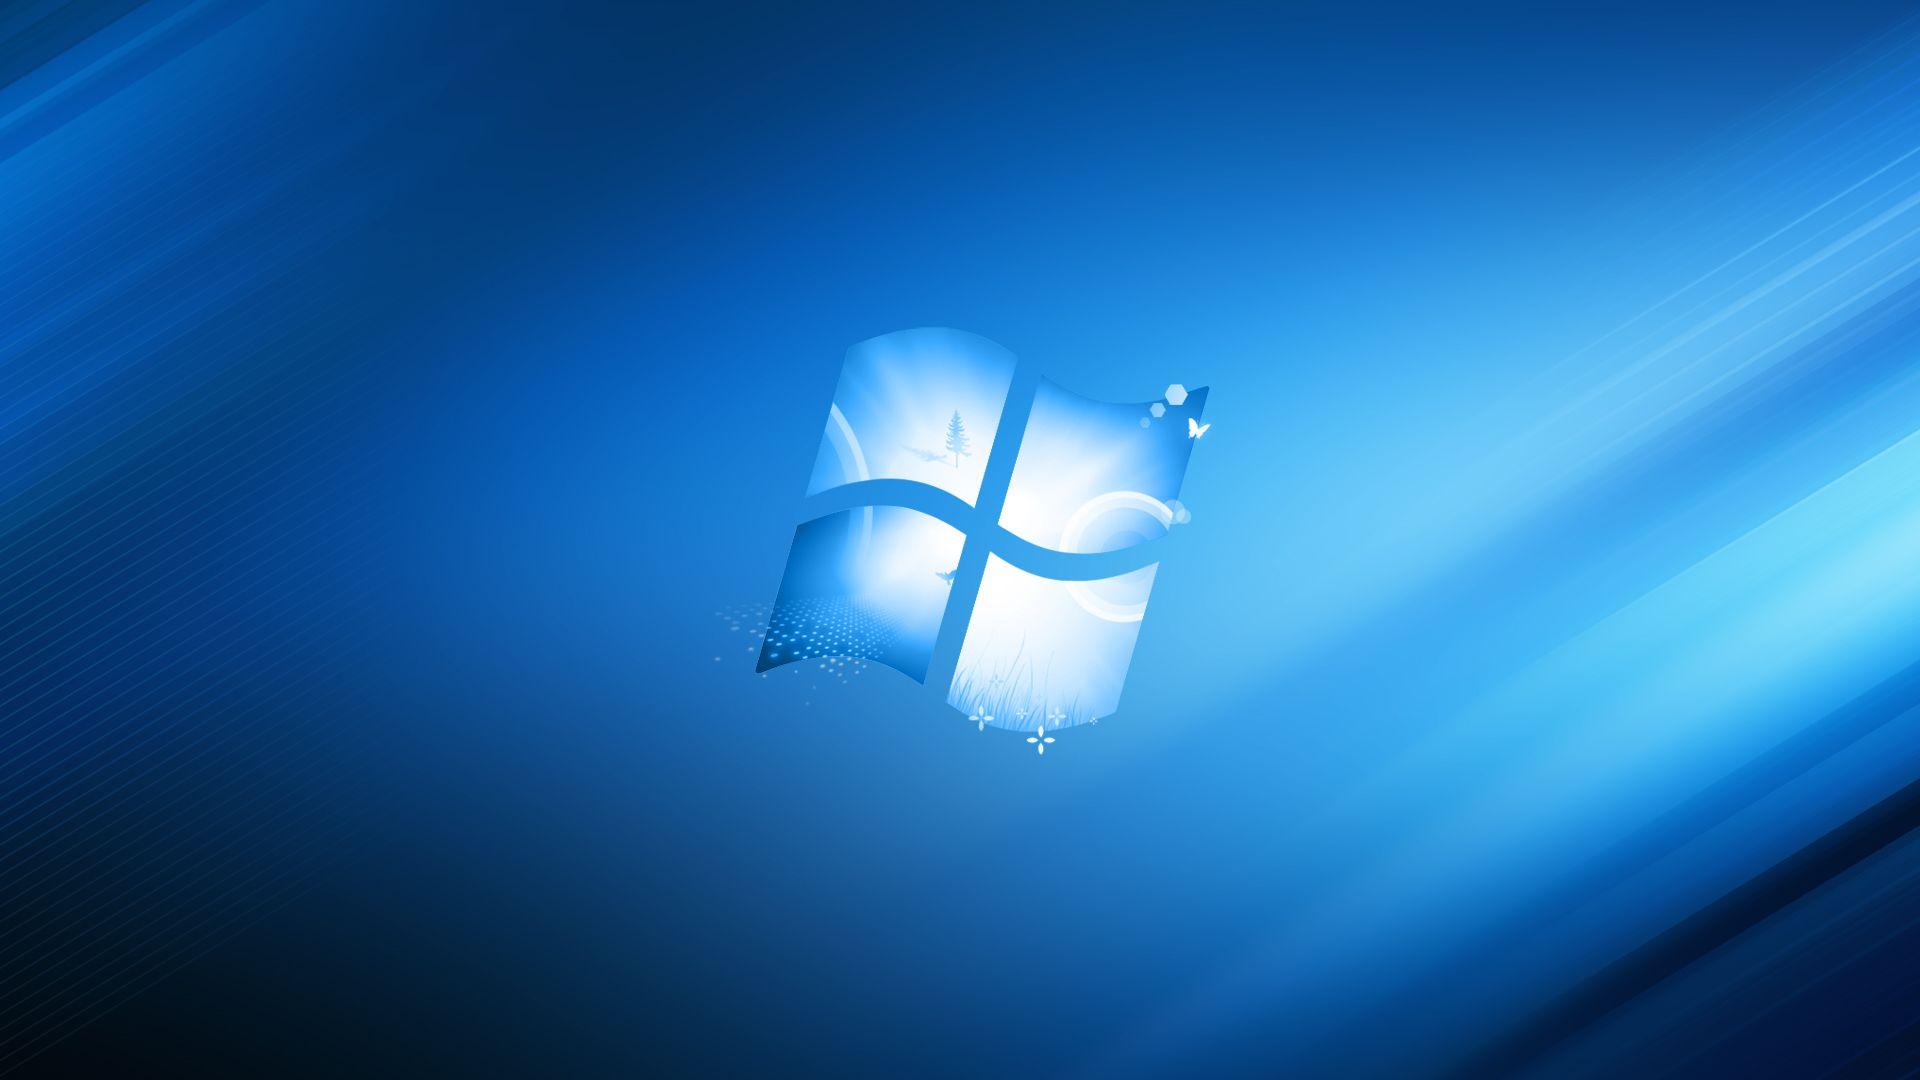 Windows 8 HD Wallpaper